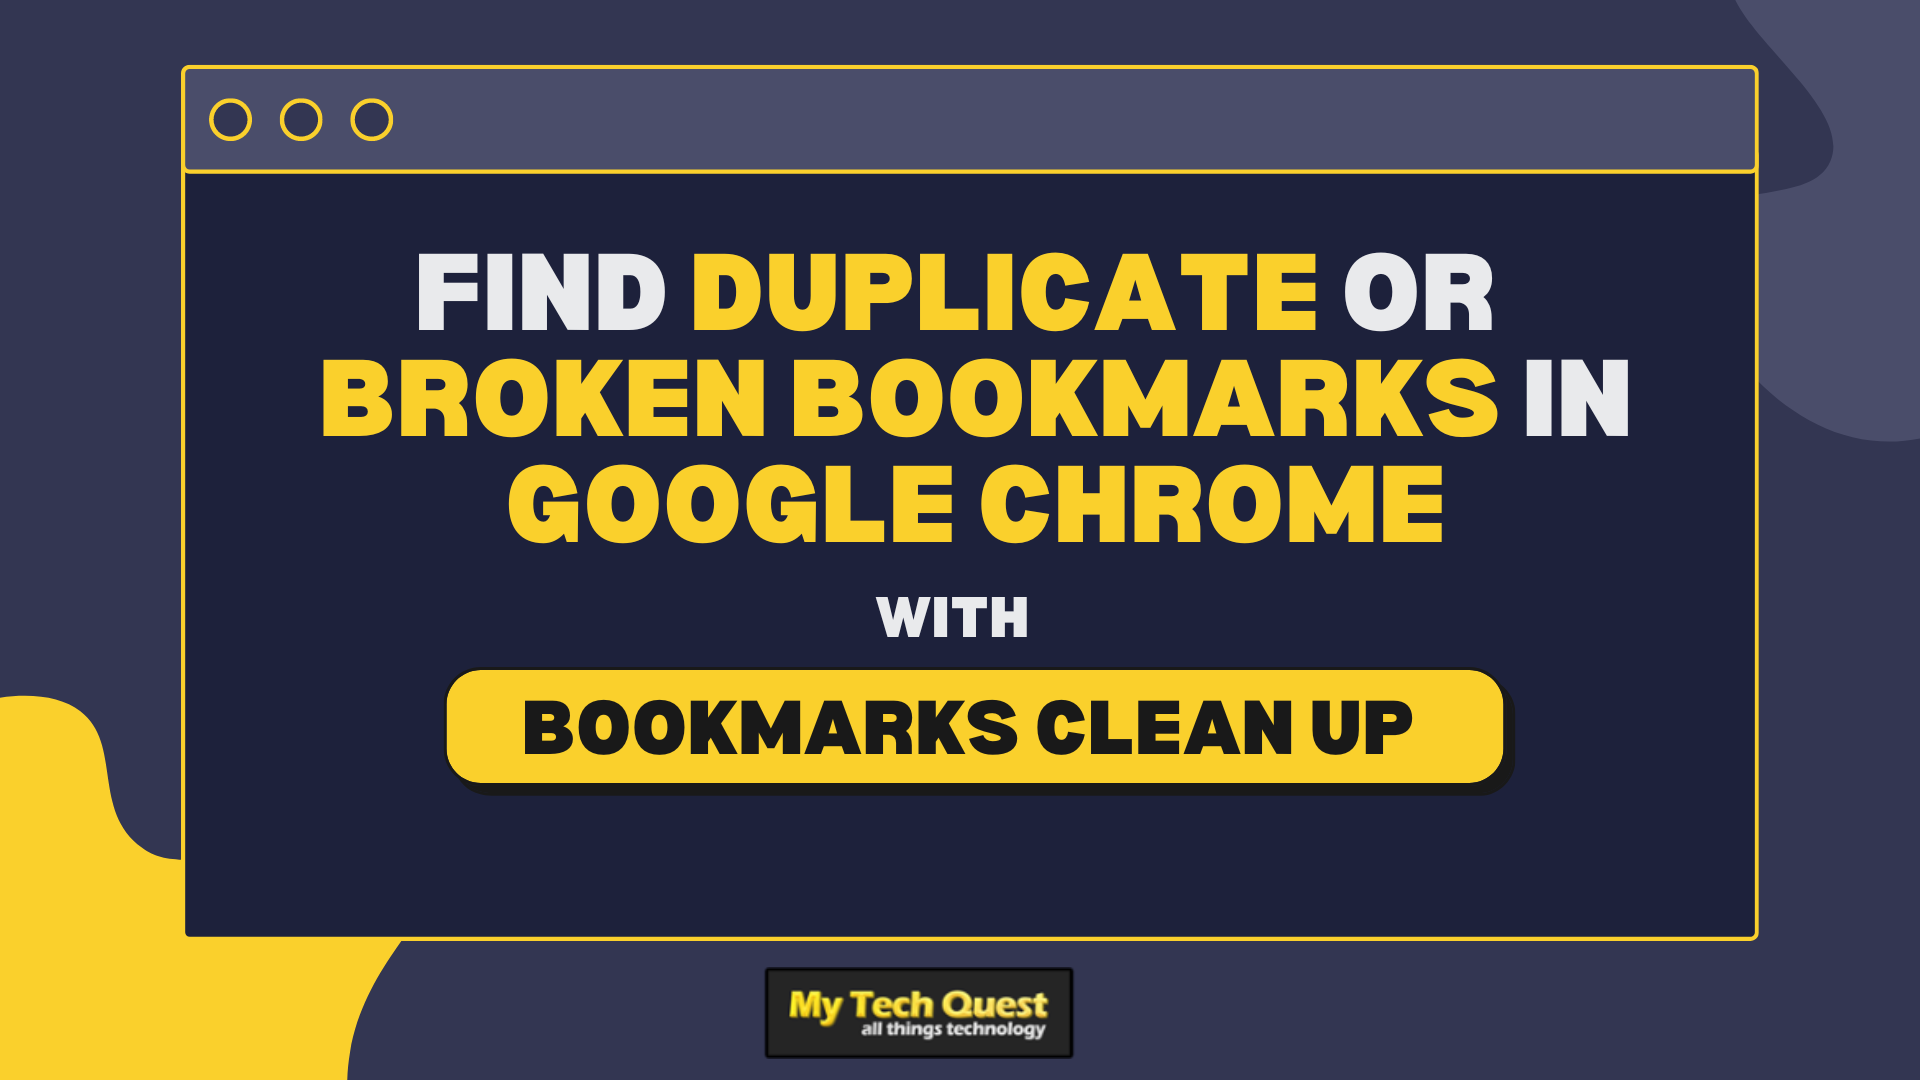 Remove Duplicate or Broken Bookmarks in Google Chrome